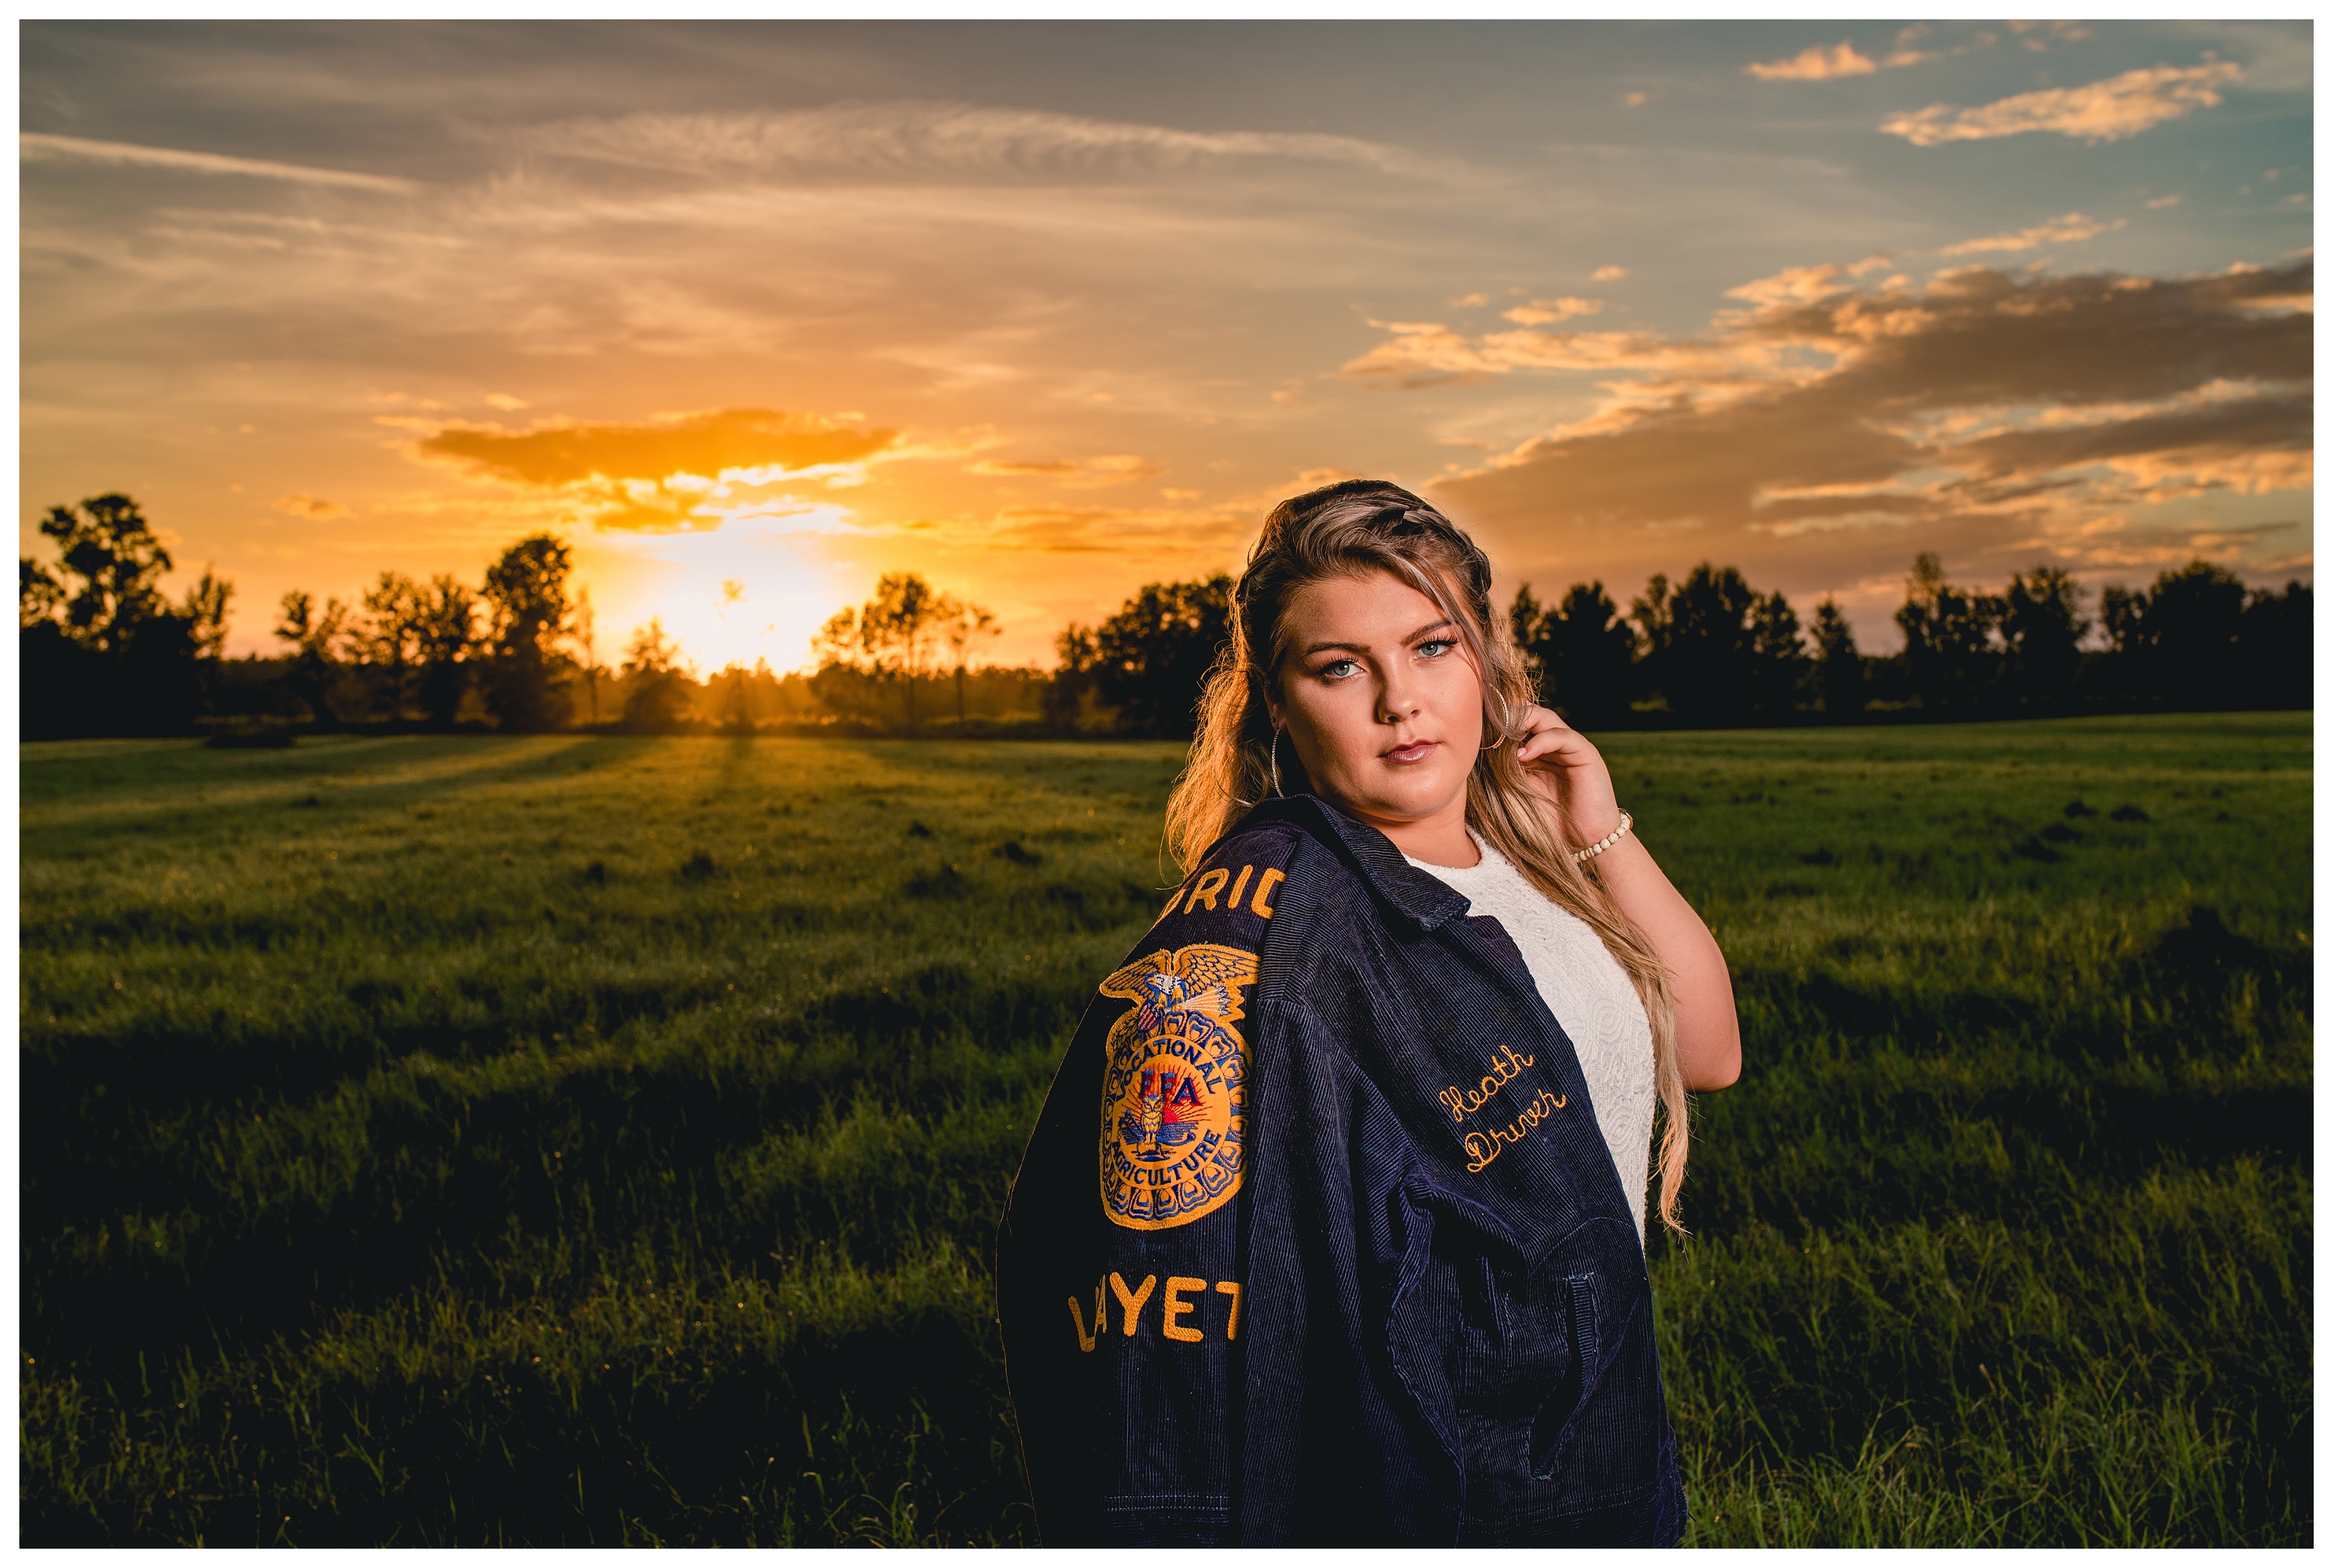 Sunset photos of high school senior girl with FFA jacket.